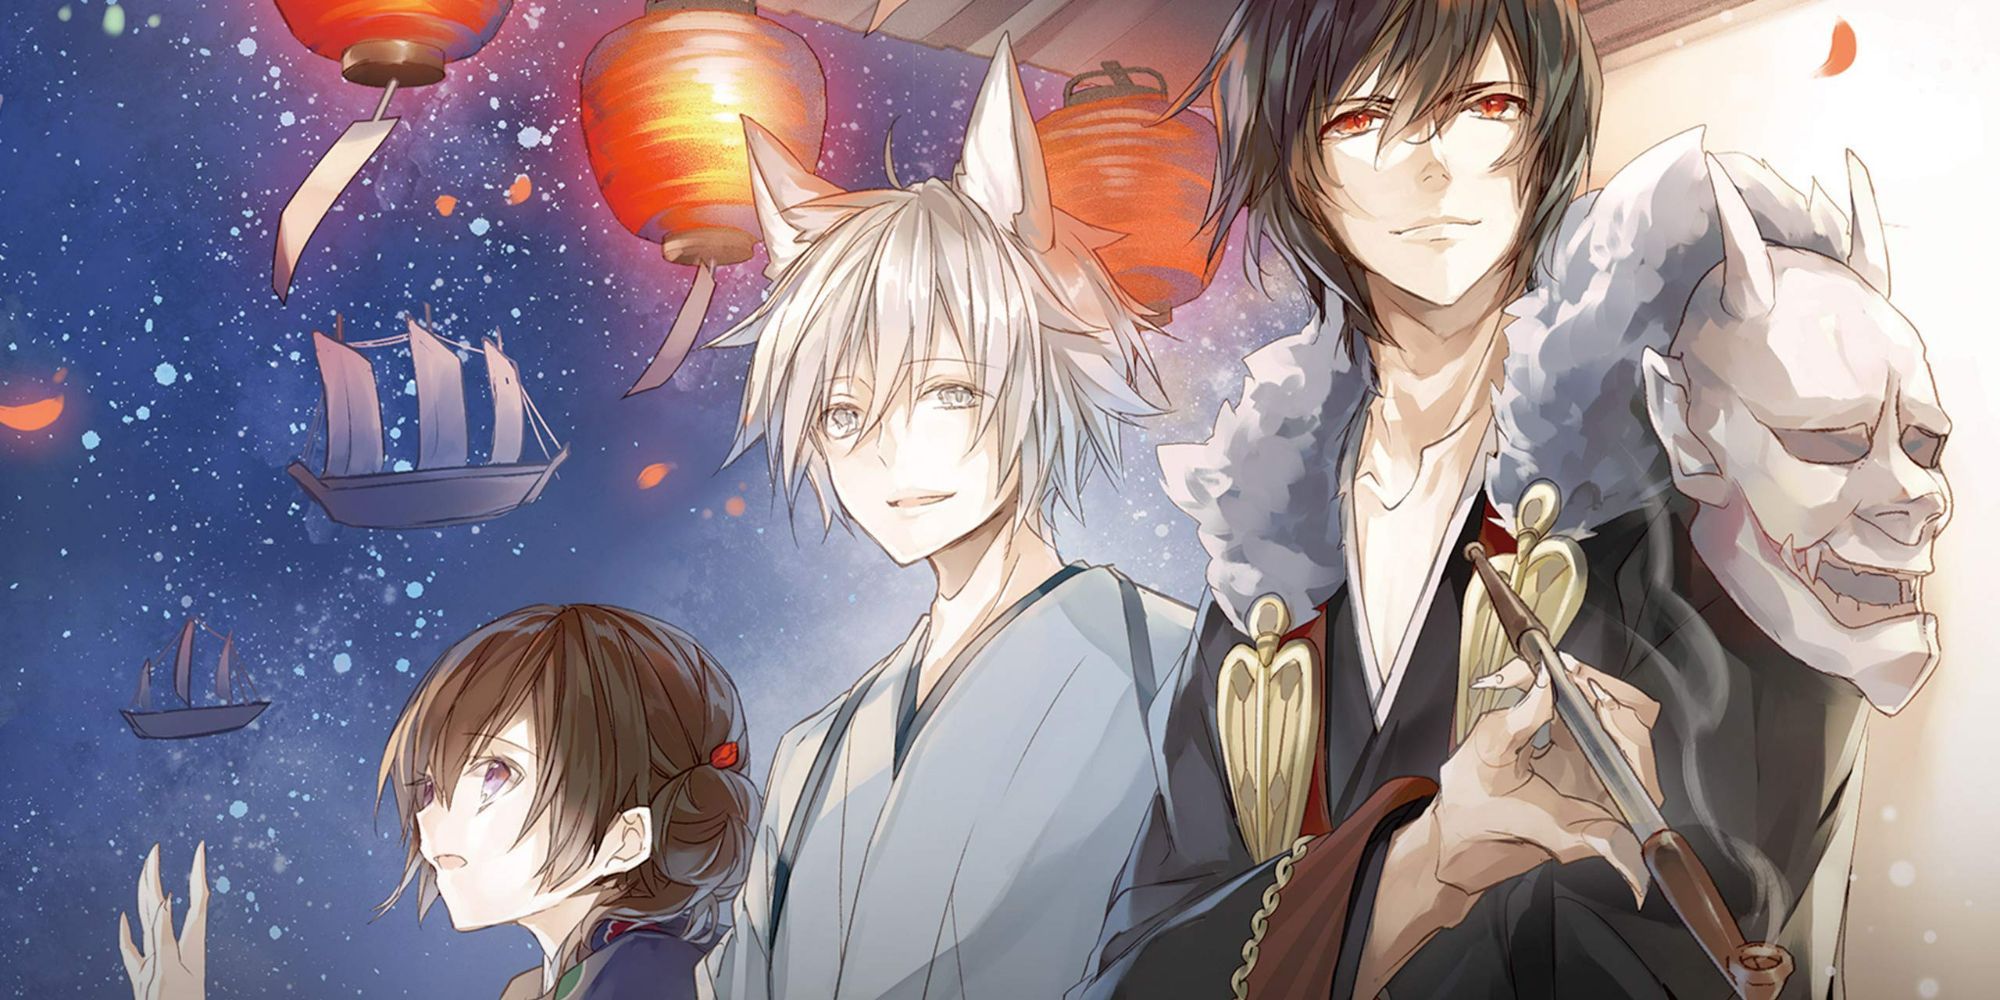 The main characters from Kakuriyo: Bed & Breakfast For Spirits